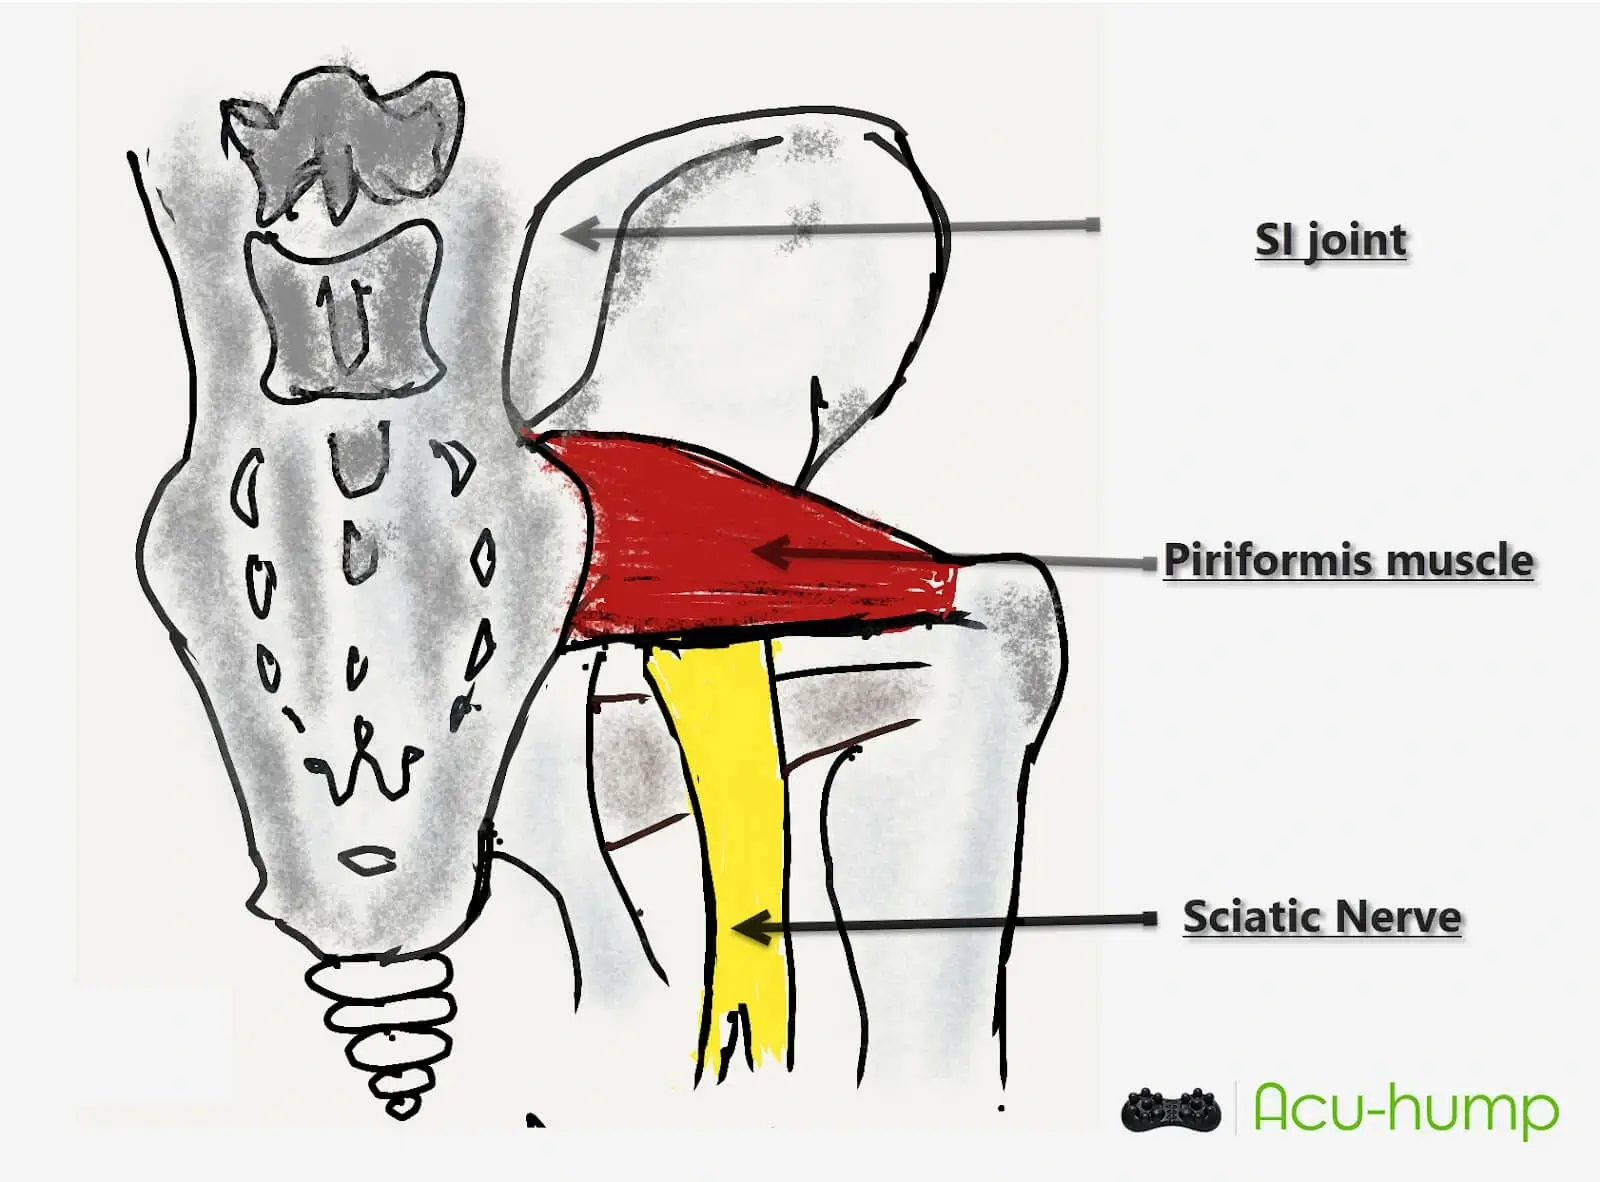 piriformis muscle and sciatic nerve